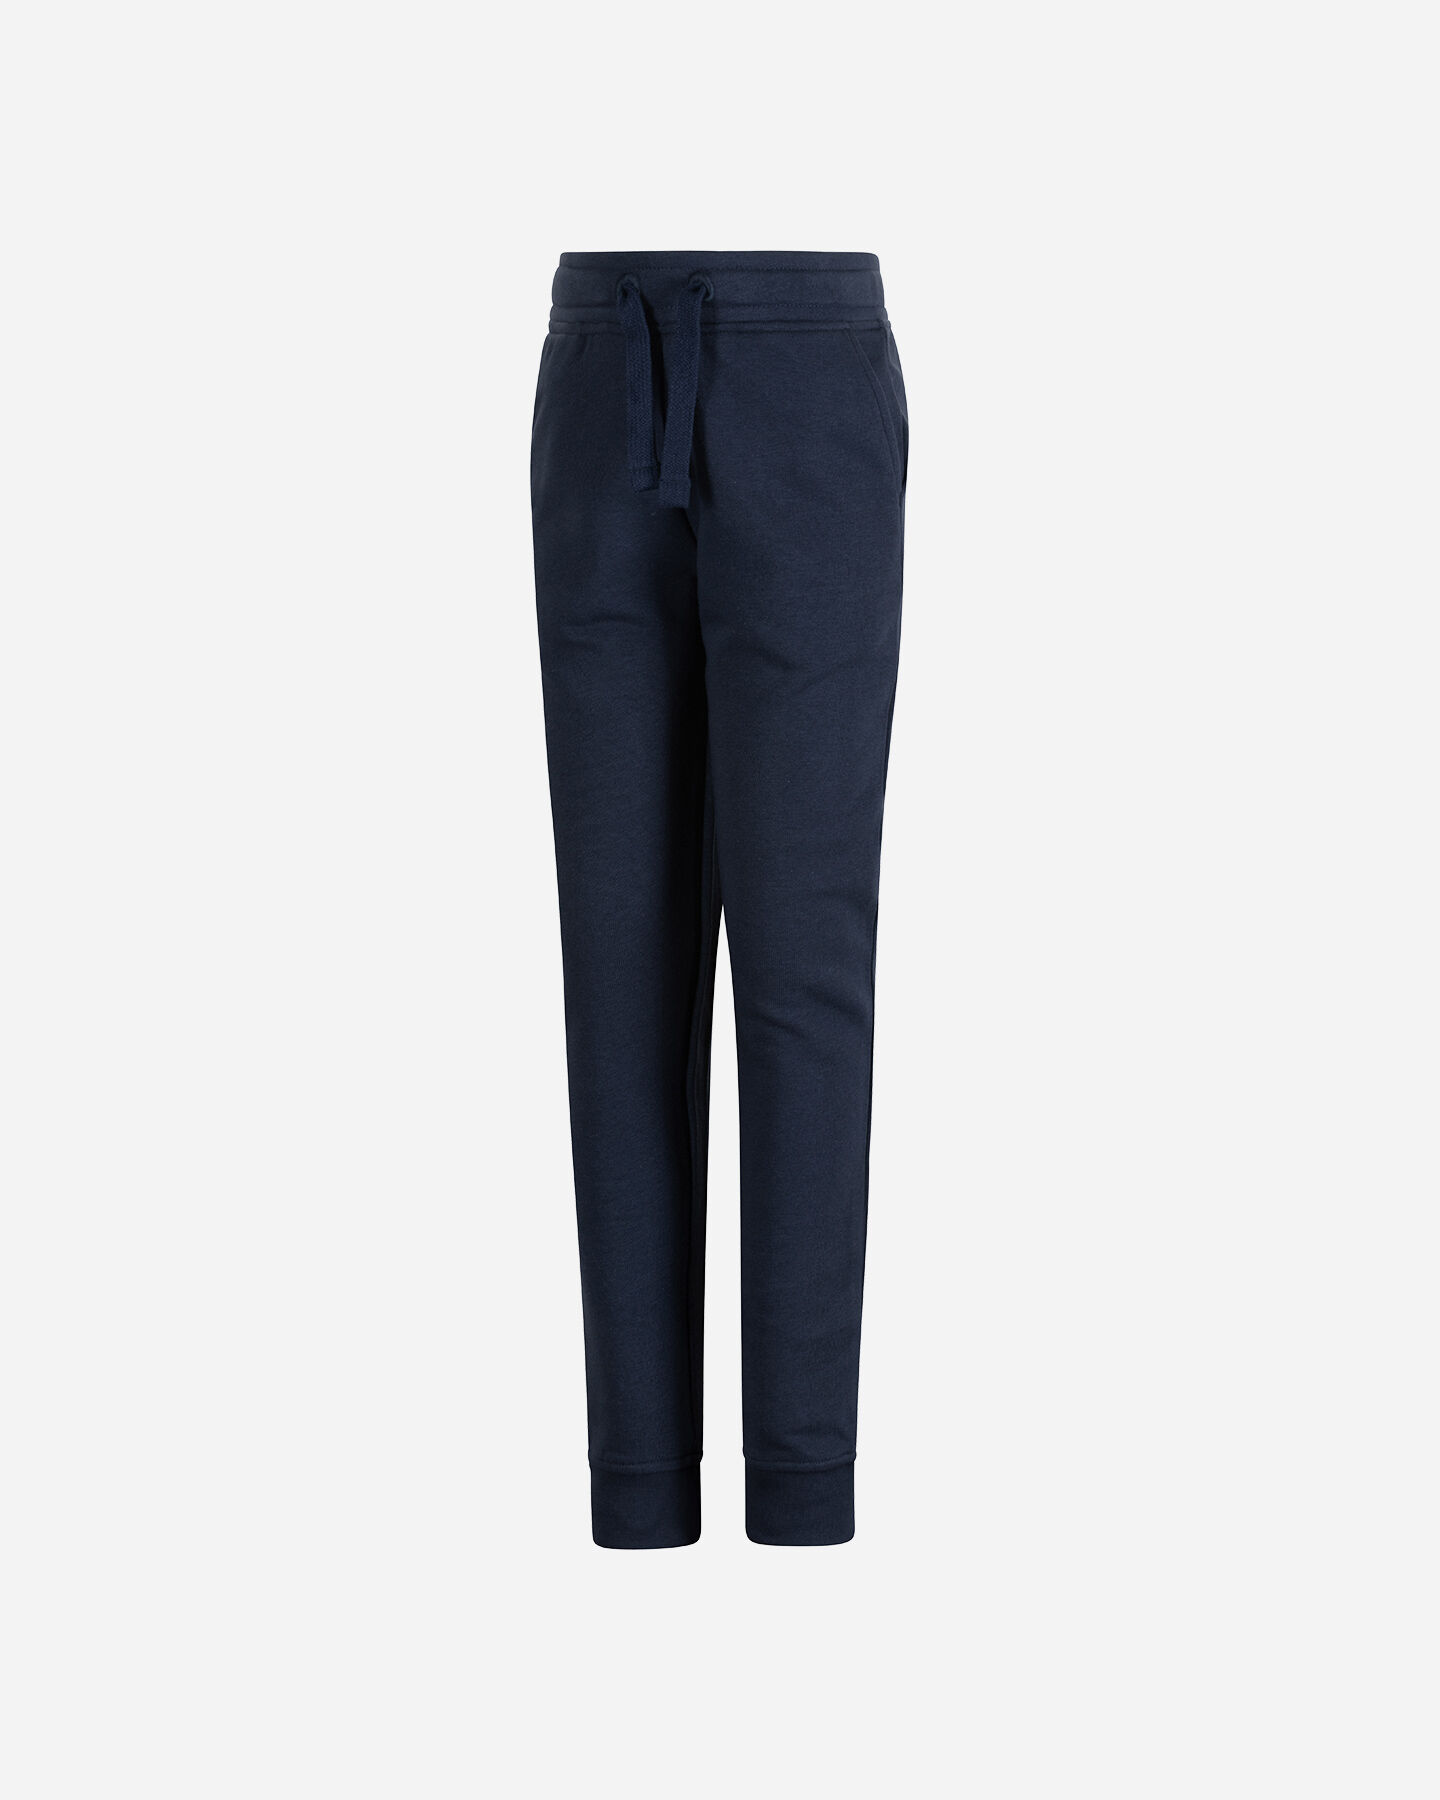  Pantalone BEAR ICONIC SMALL LOGO JR S4120570|914|6 scatto 0